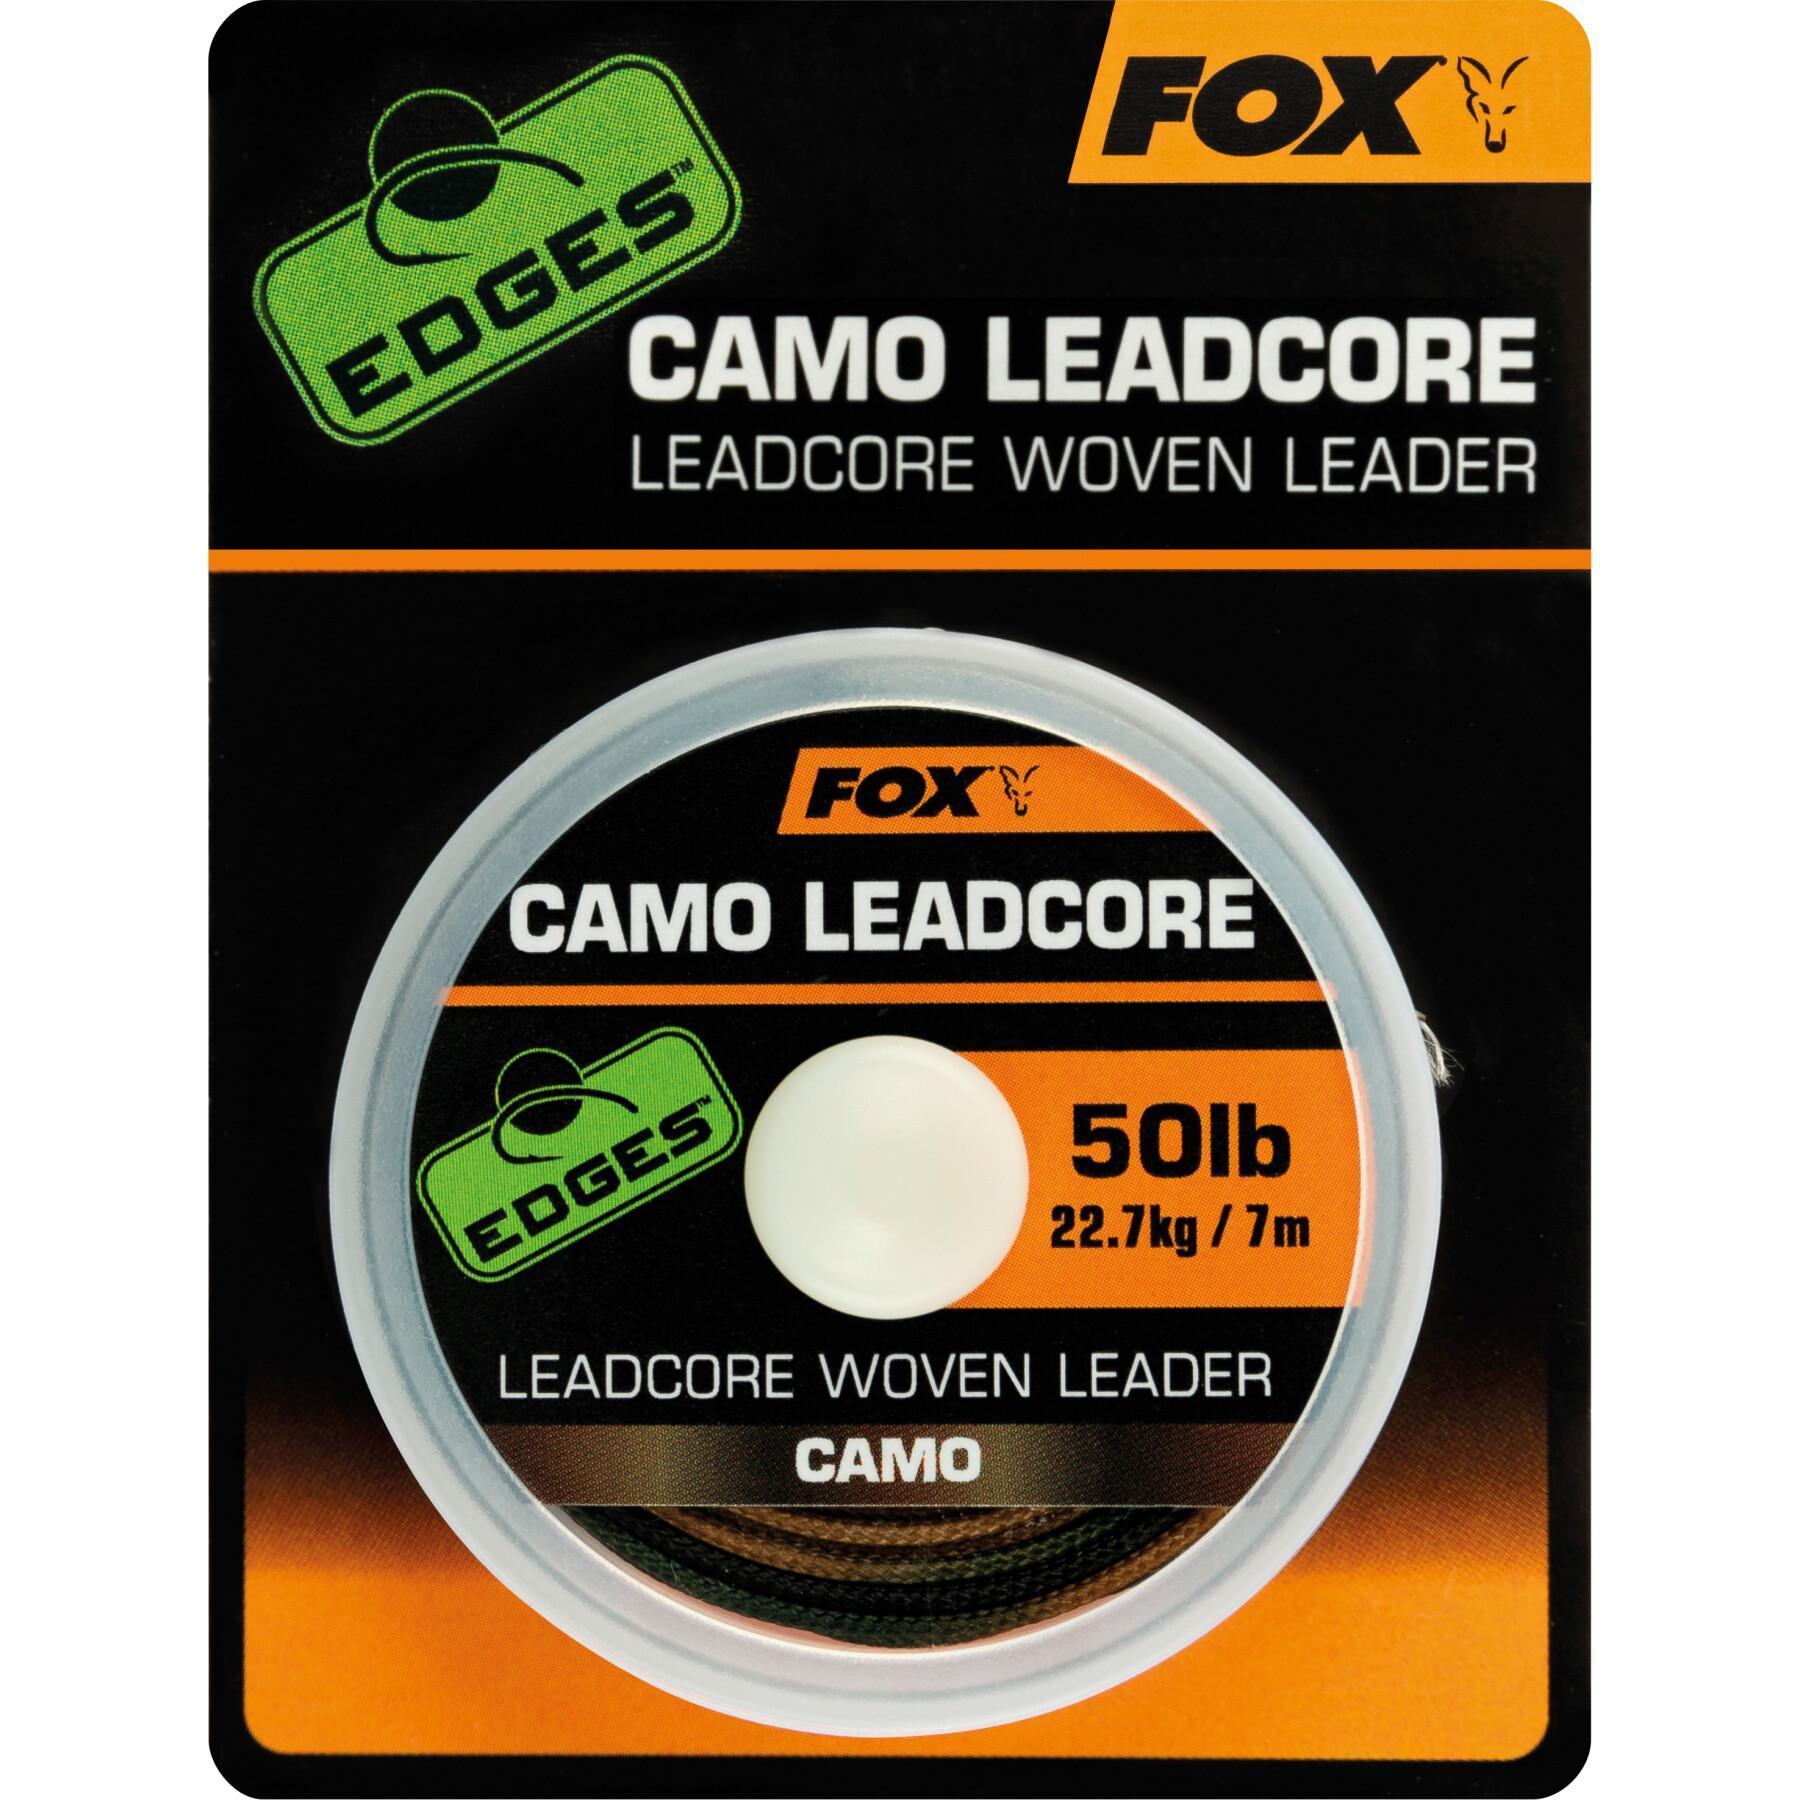 Kopfzeile Fox Camo Leadcore 50lb